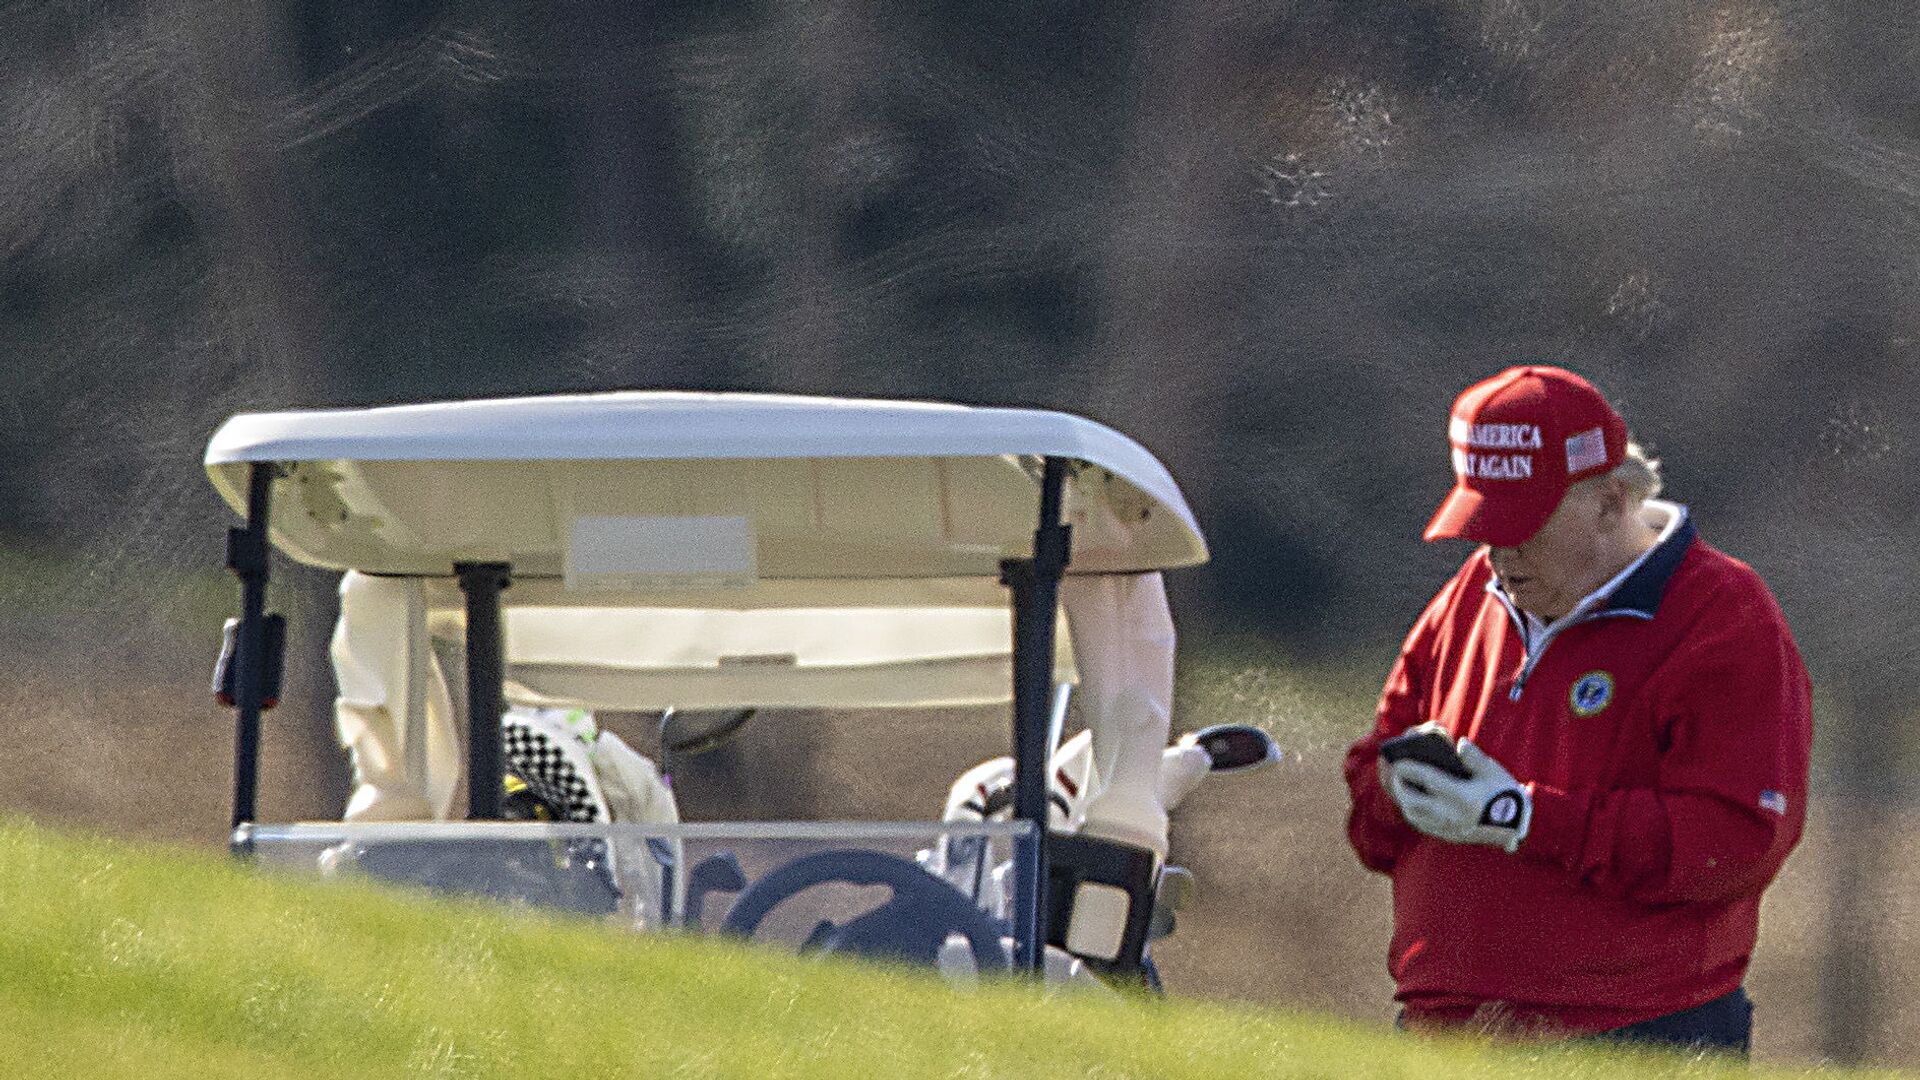  US President Donald Trump makes a phone call as he golfs at Trump National Golf Club on November 26, 2020 in Sterling, Virginia - Sputnik International, 1920, 02.10.2021